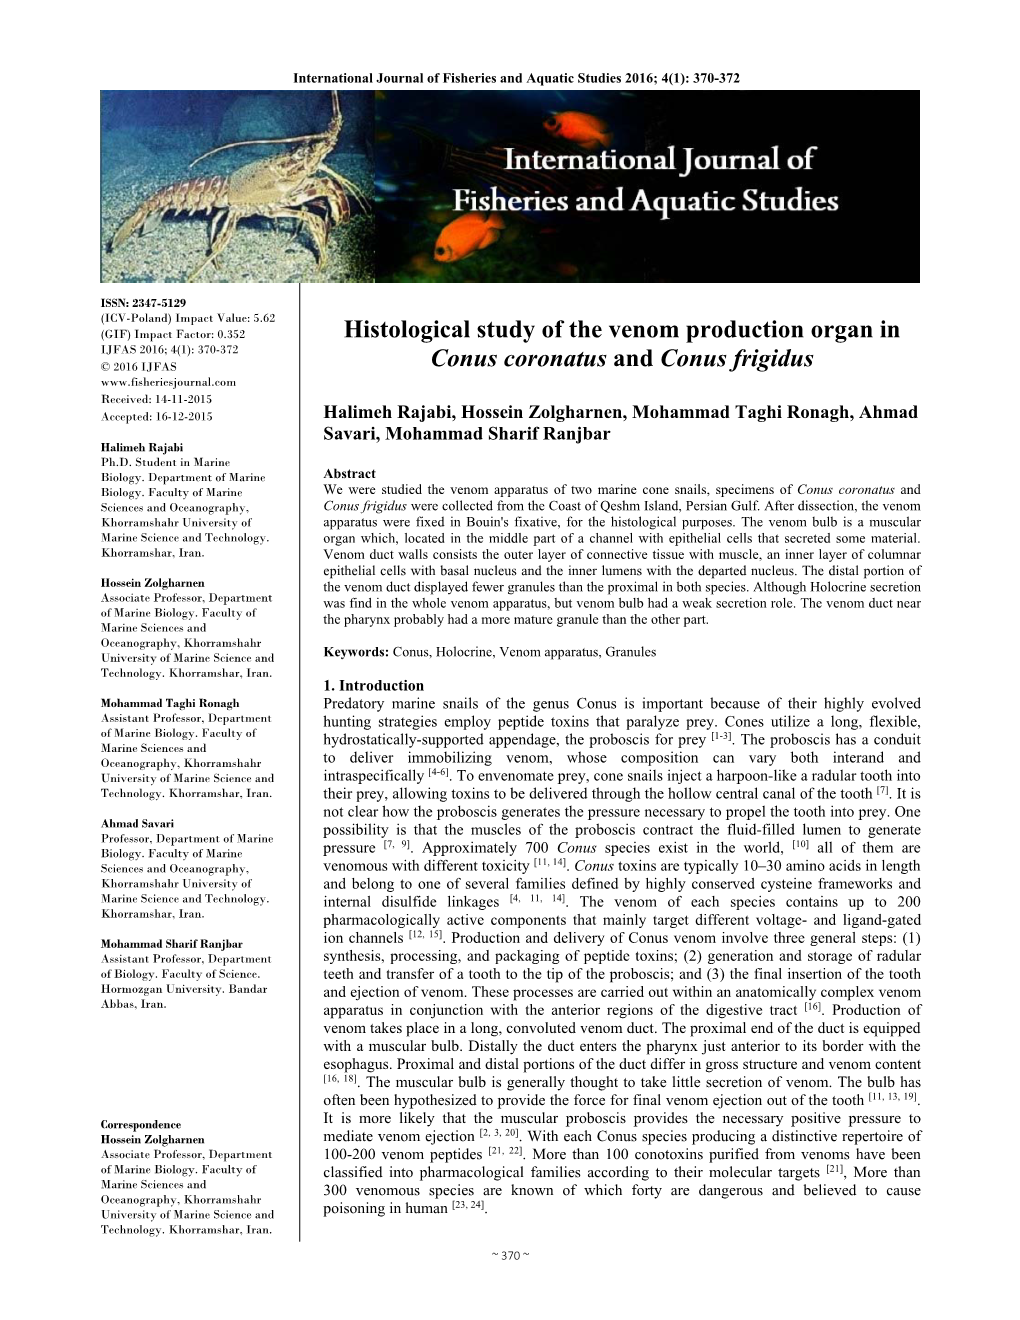 Histological Study of the Venom Production Organ in Conus Coronatus and Conus Frigidus